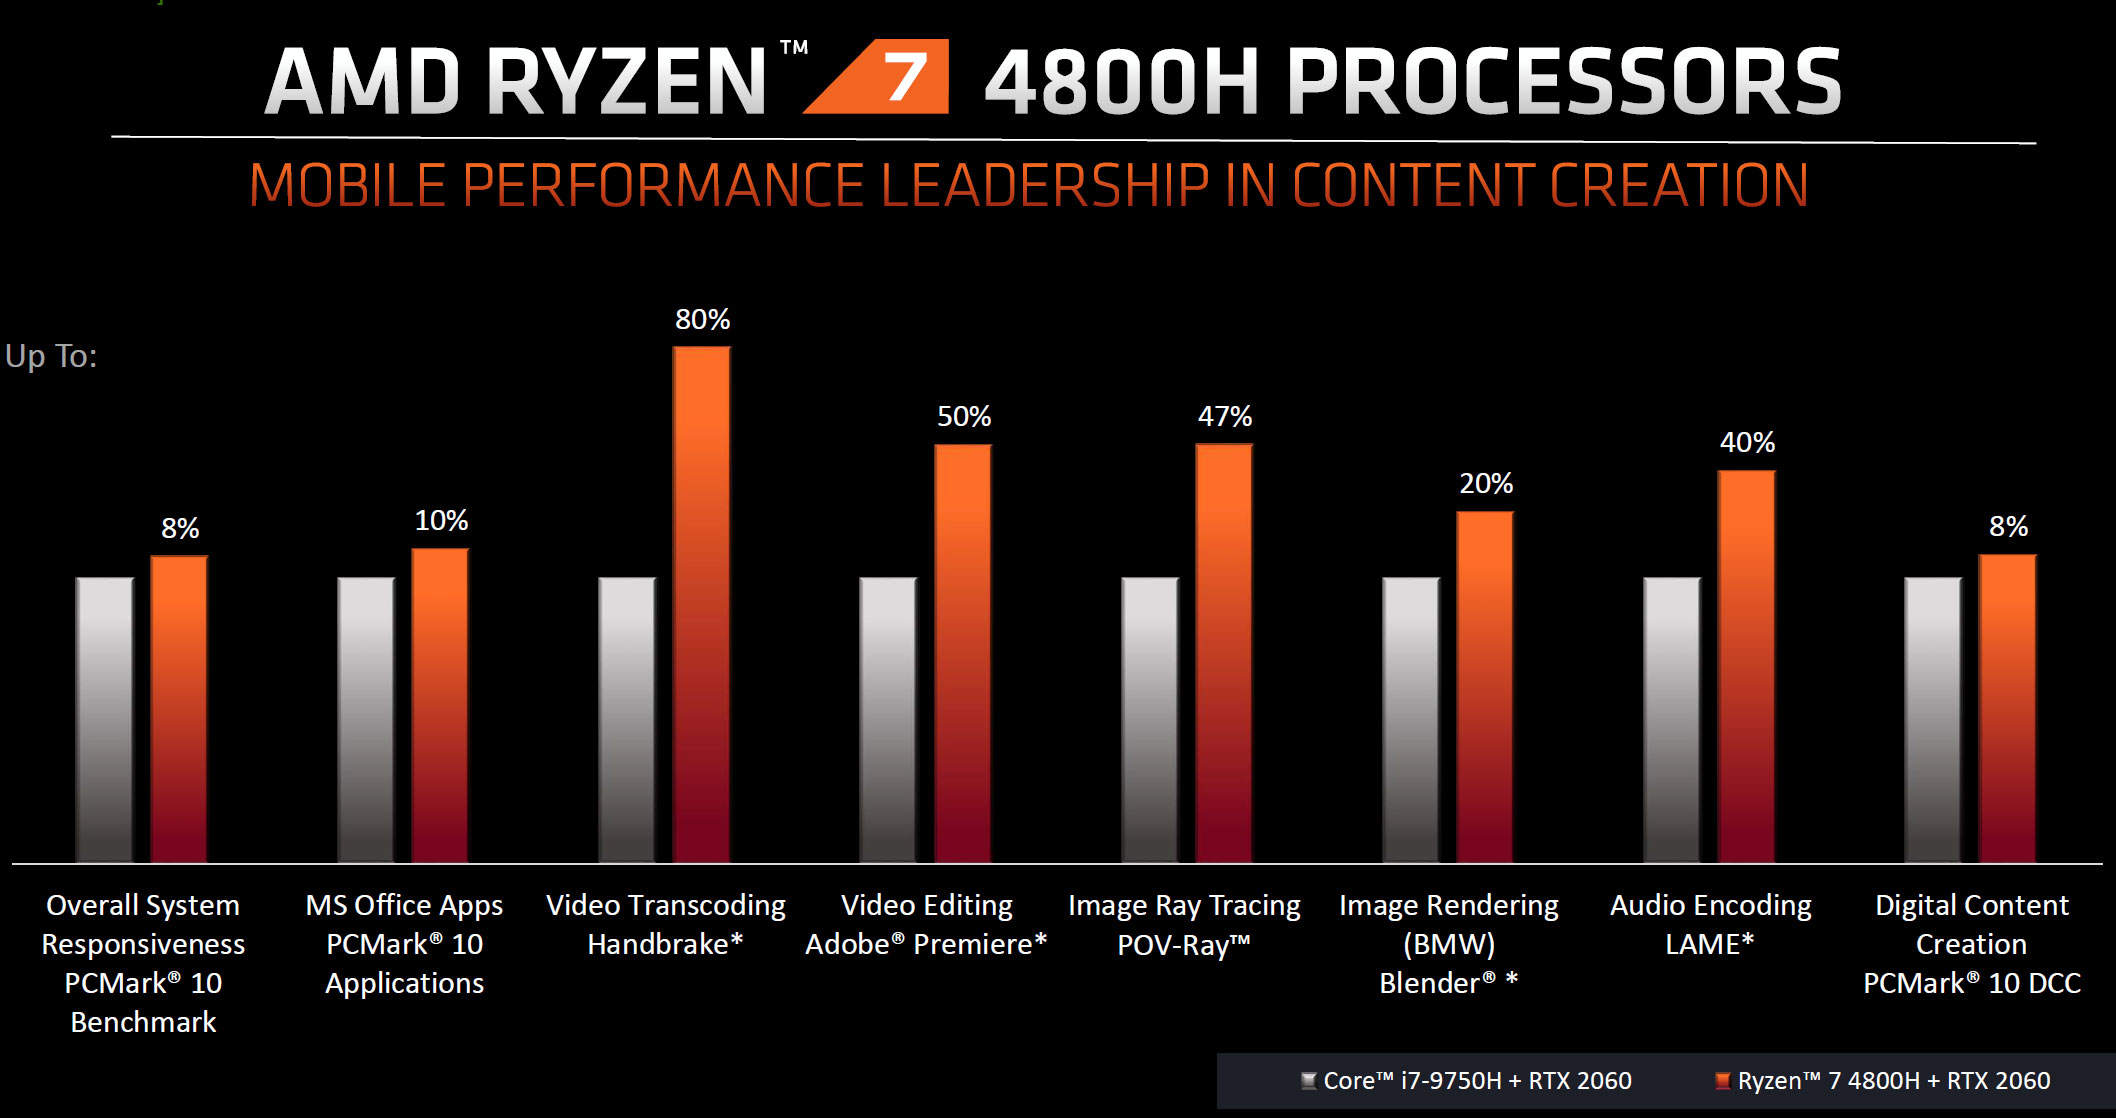 AMD Ryzen 4800H Content Creation performance